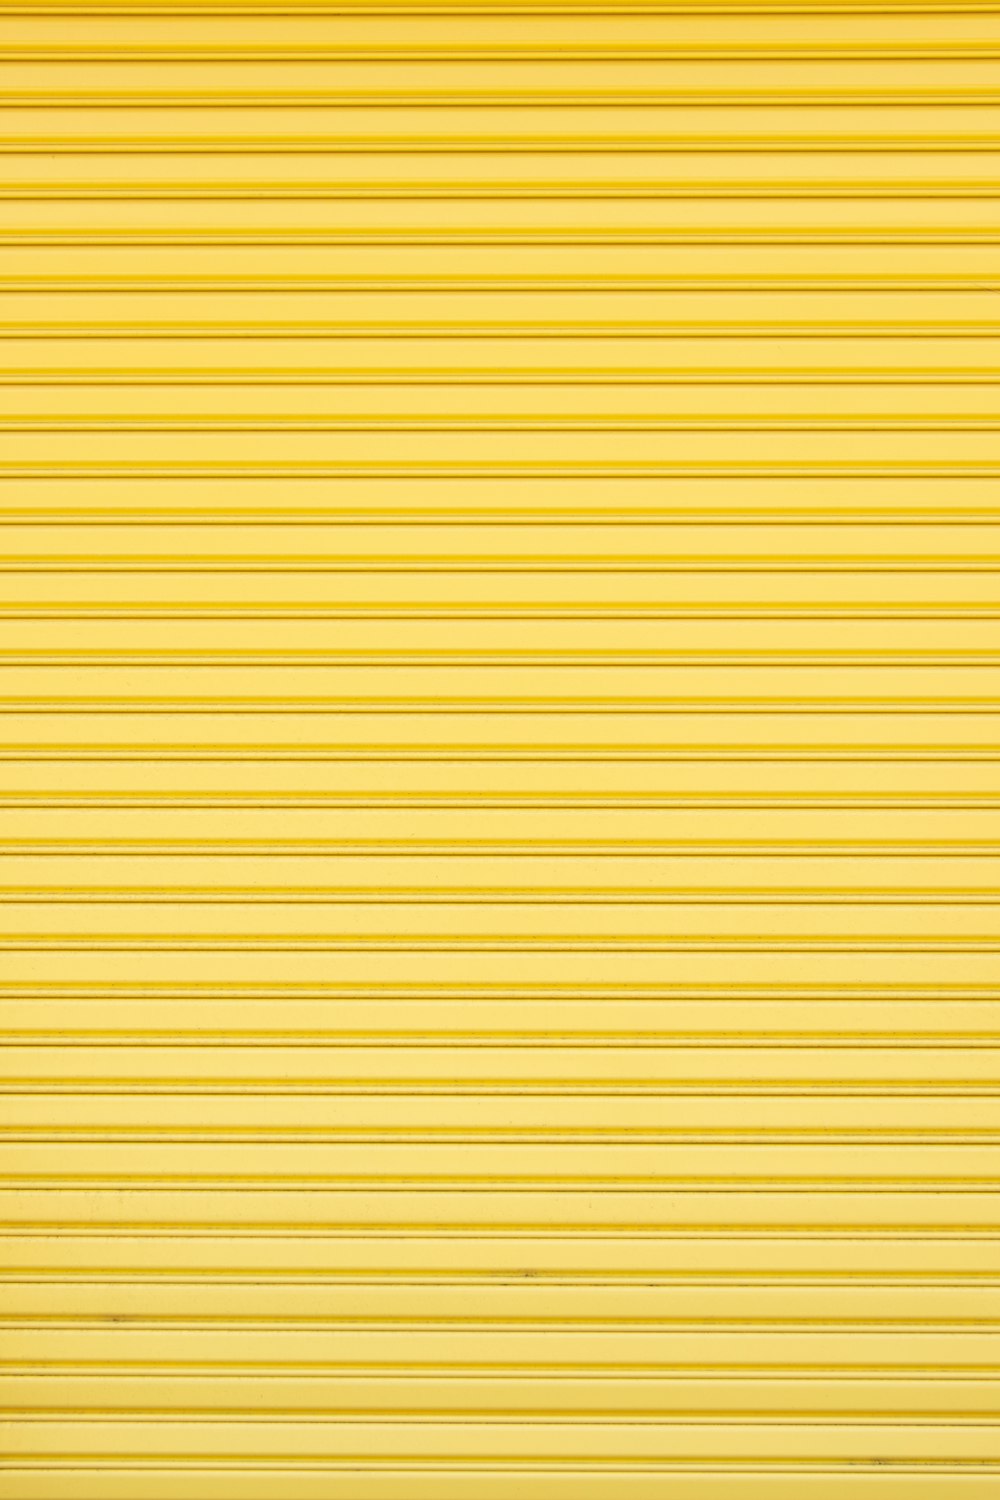 una porta gialla del garage chiusa